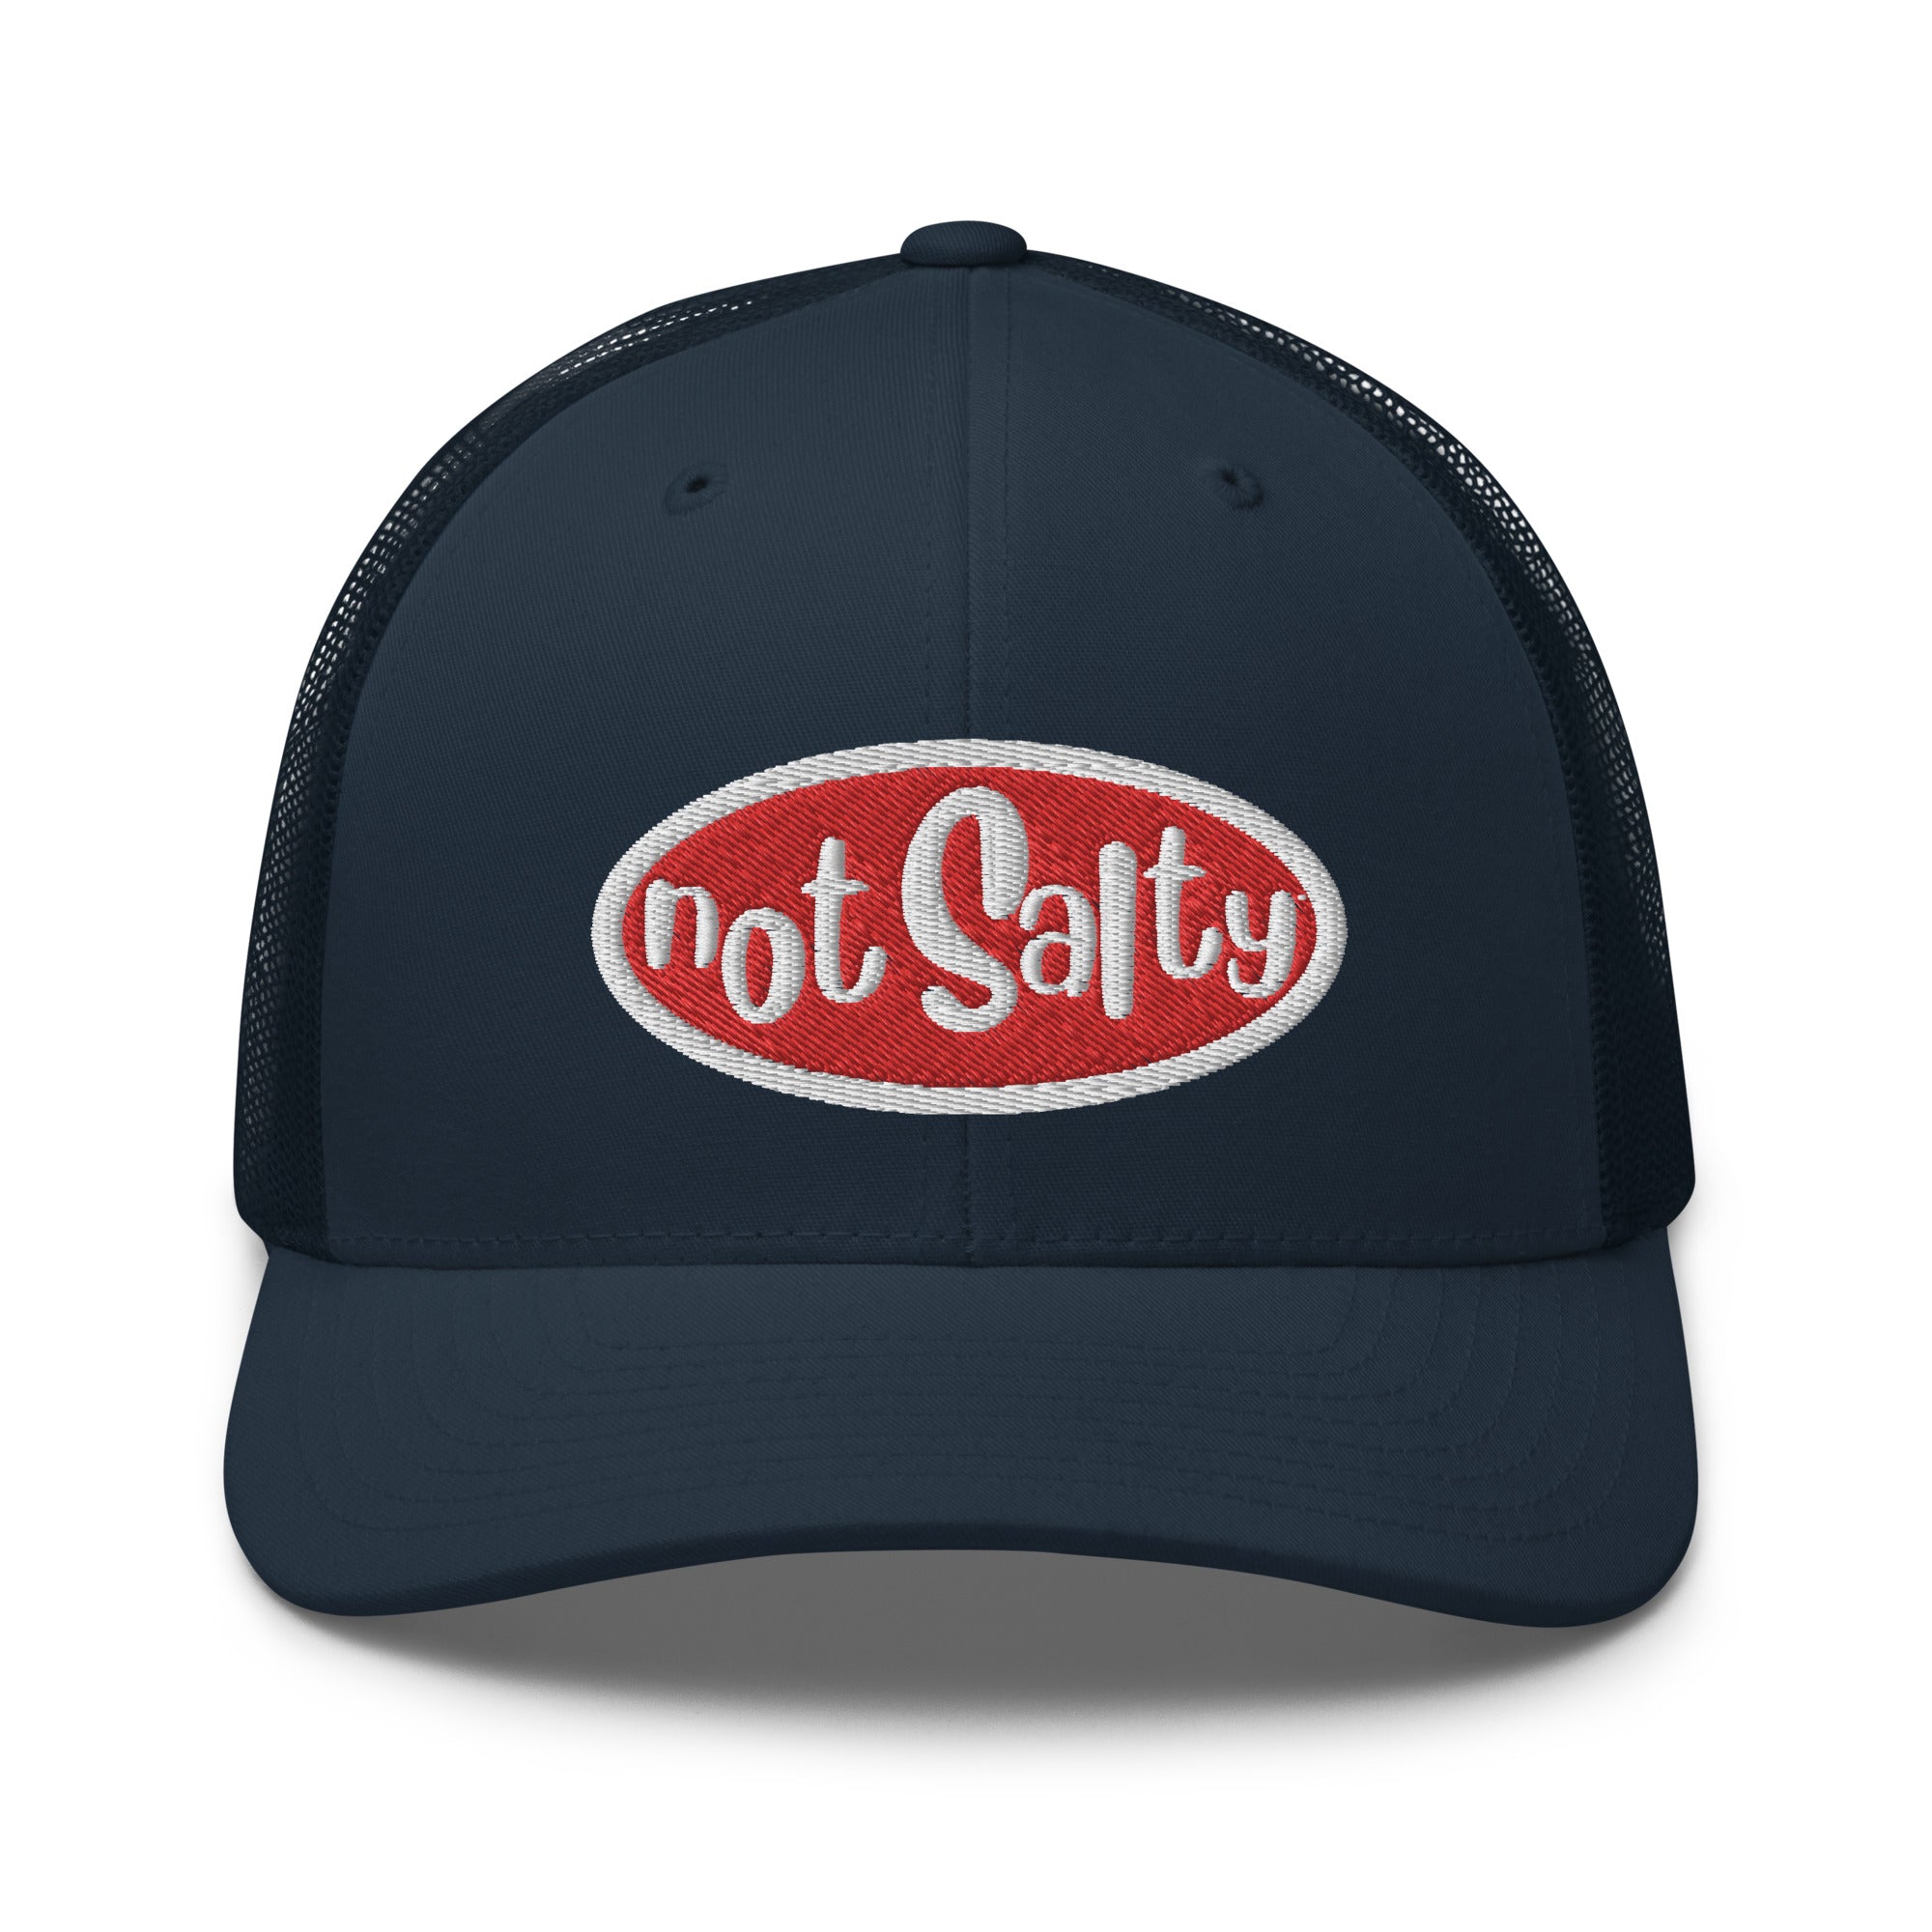 Not Salty "The Brand" Trucker Cap